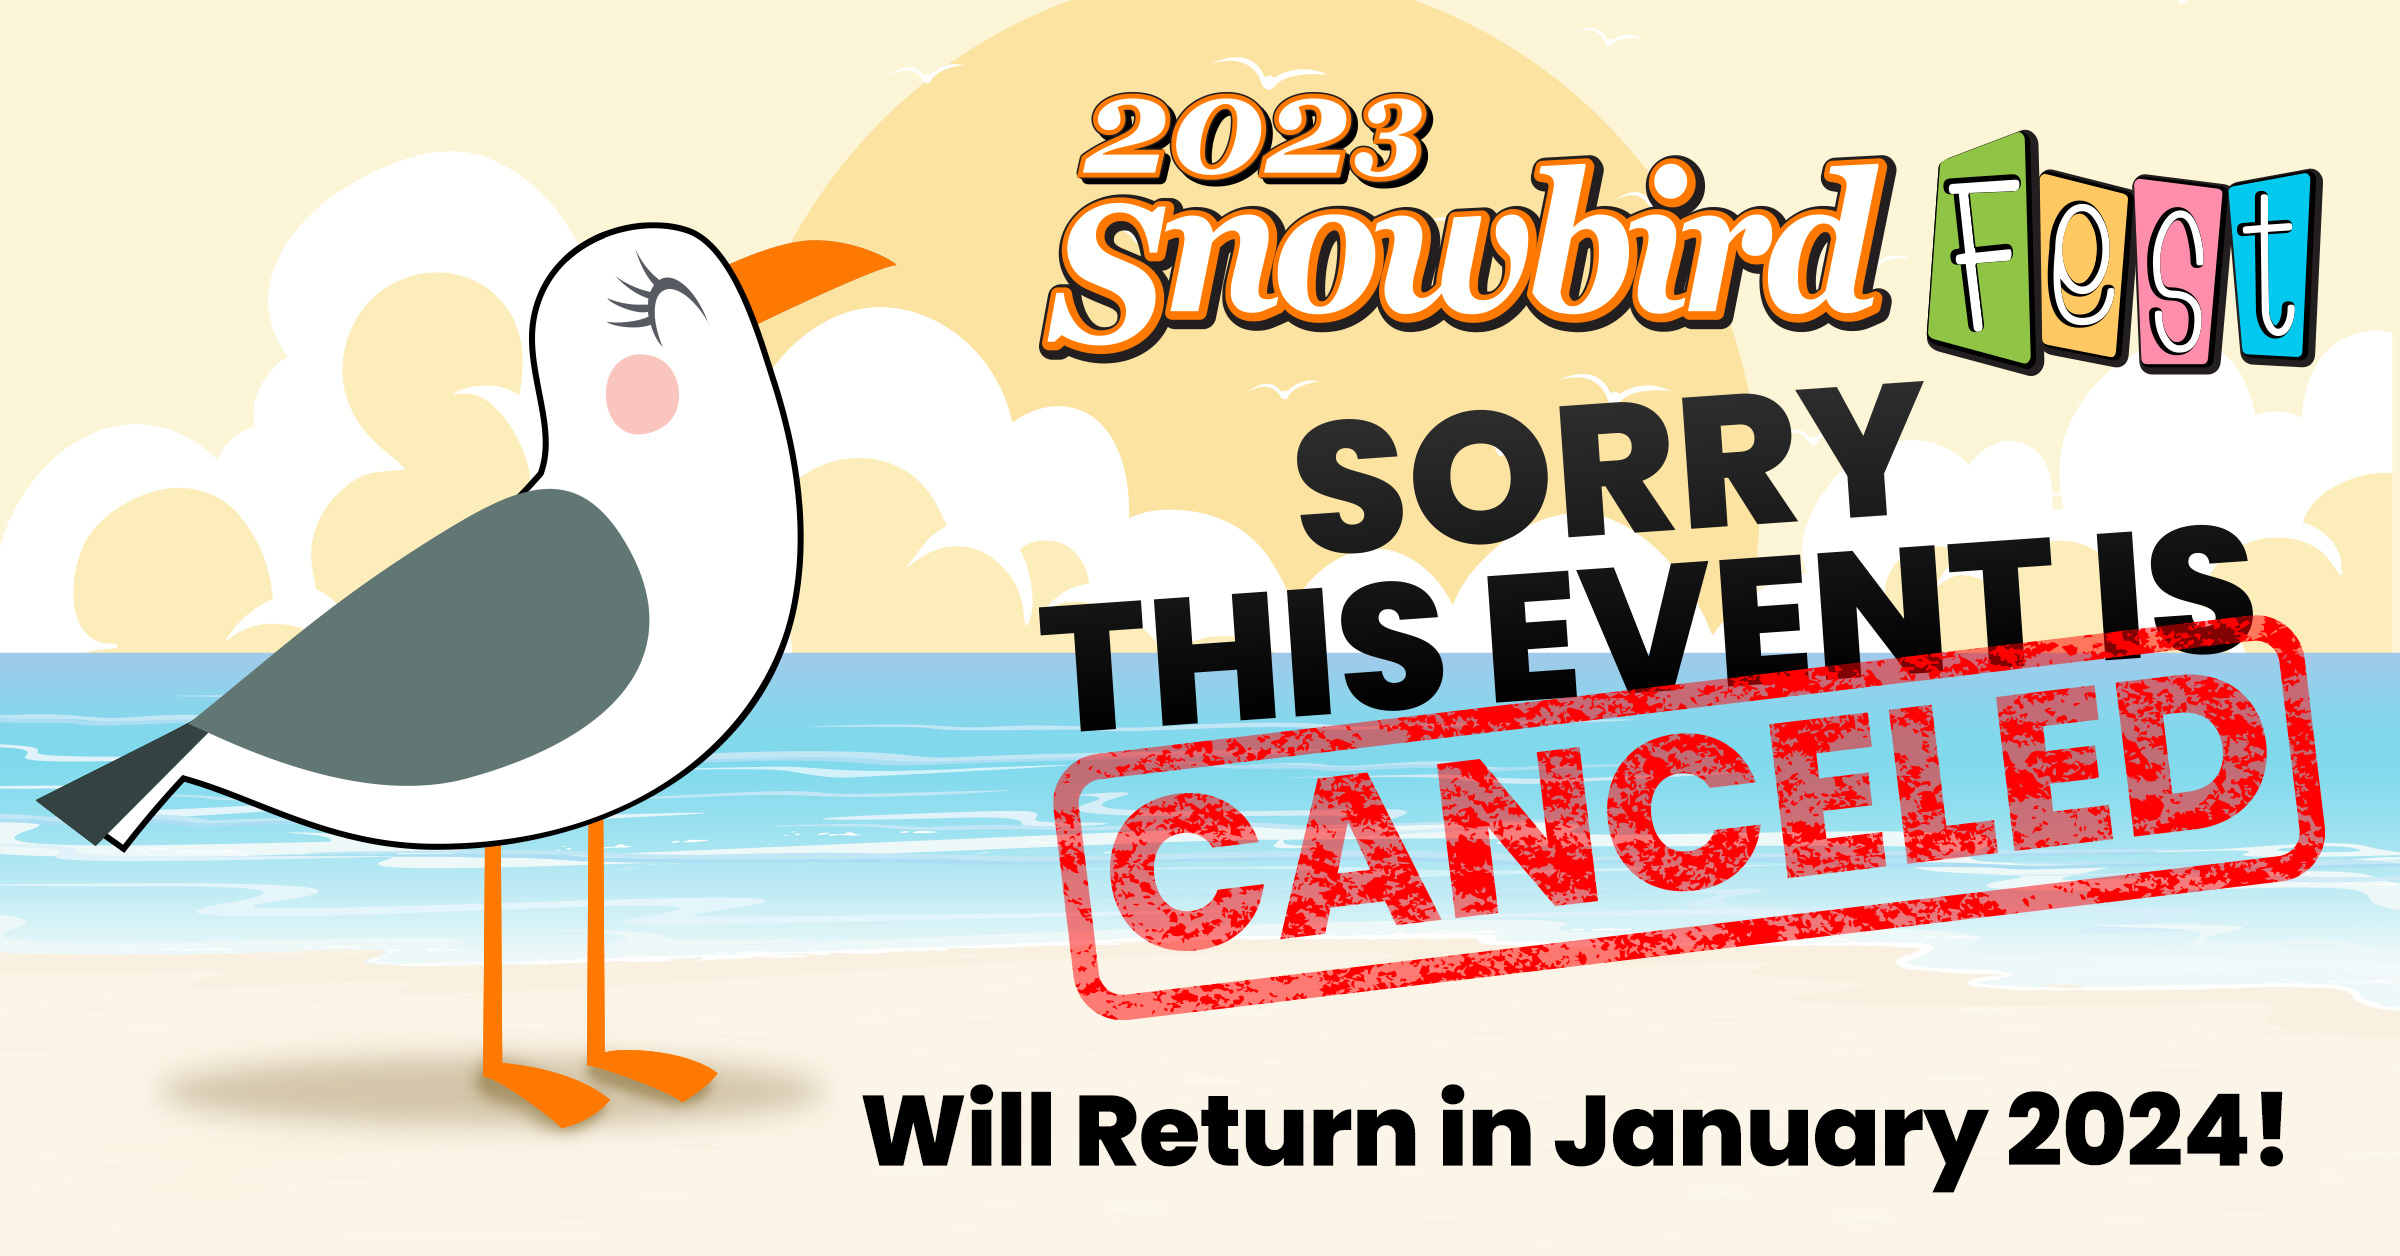 Snowbird Fest 2023 Where Will YOU Spend Next Winter?